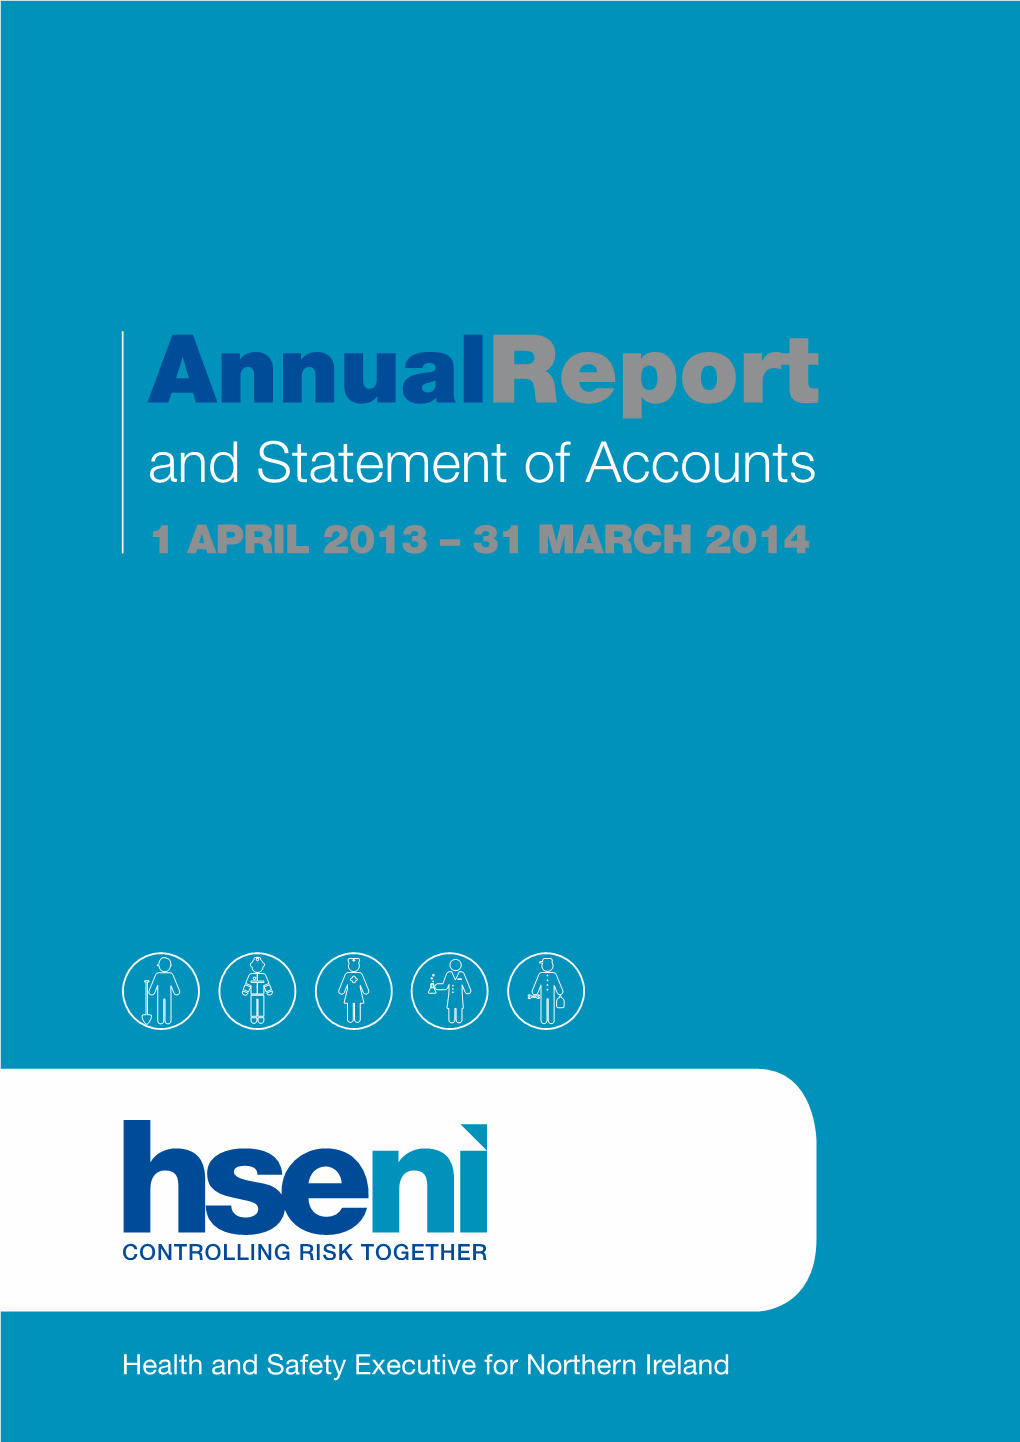 HSENI Annual Report 2013-14